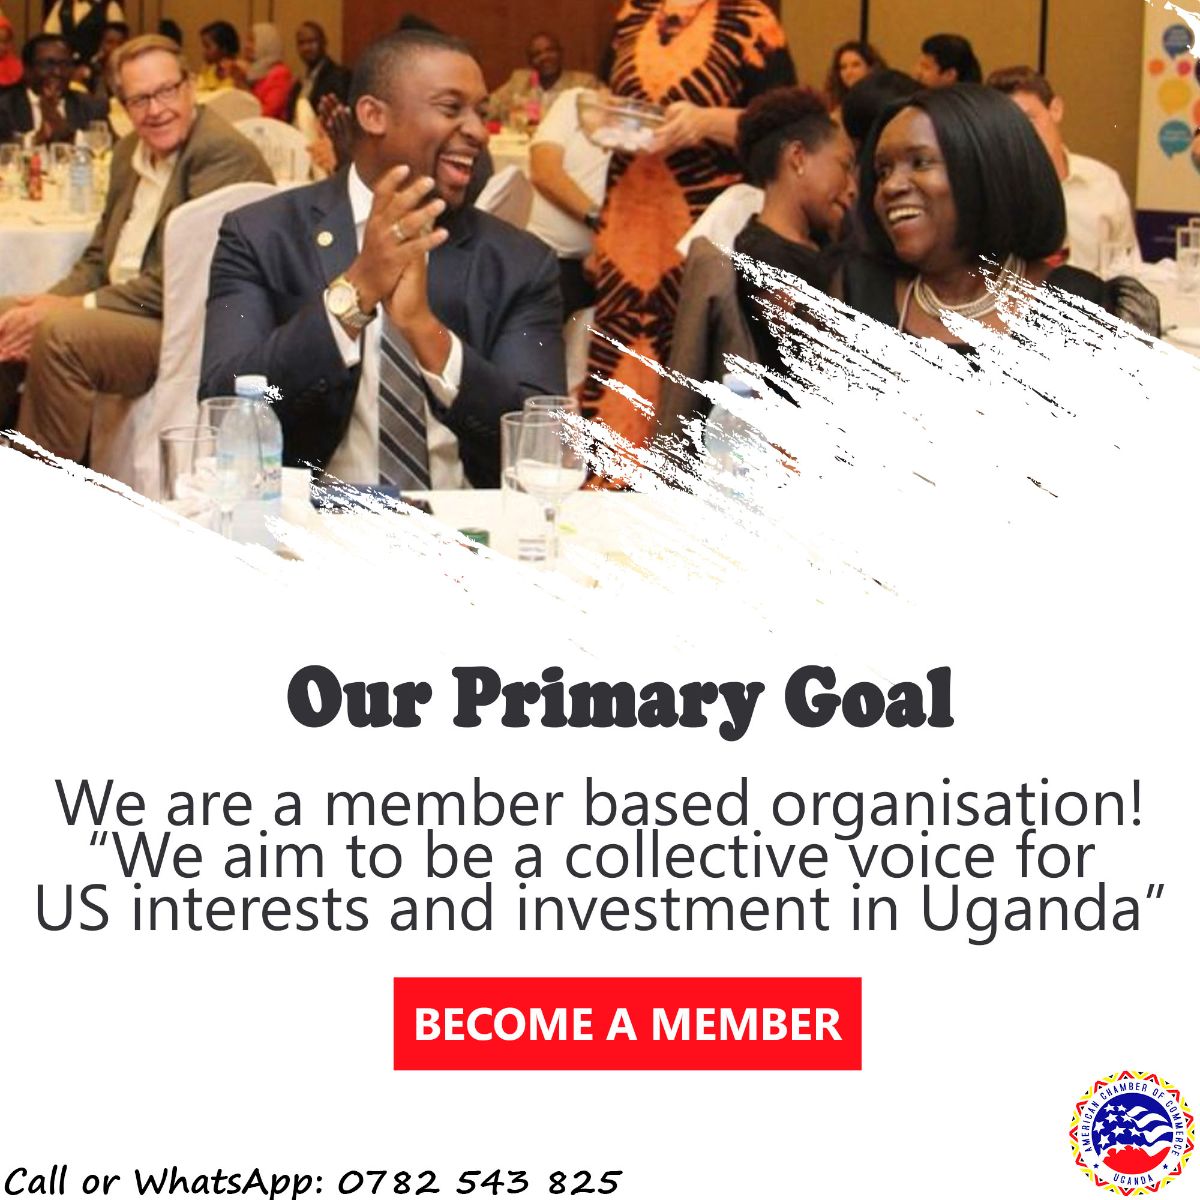 AmCham Uganda Strategy